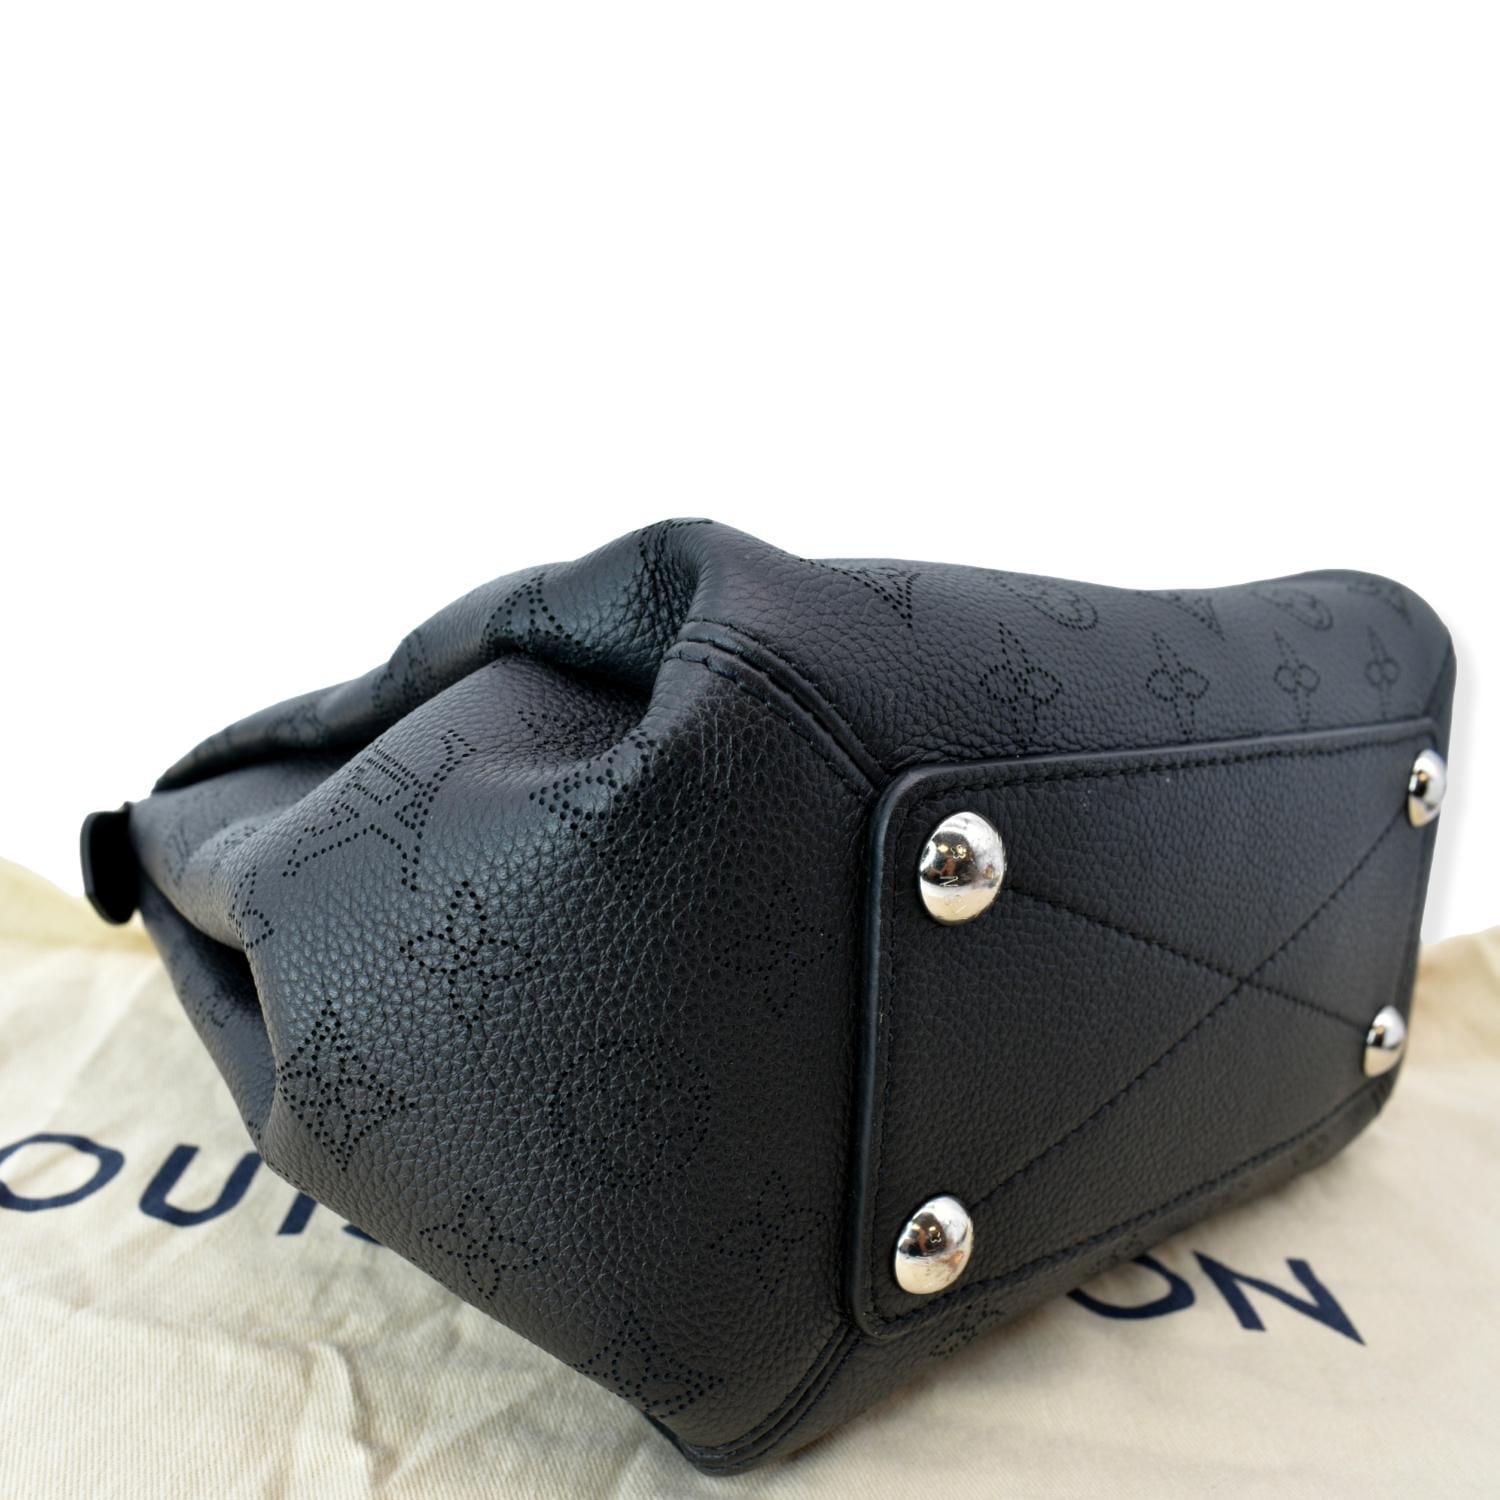 Babylone Monogram – Keeks Designer Handbags